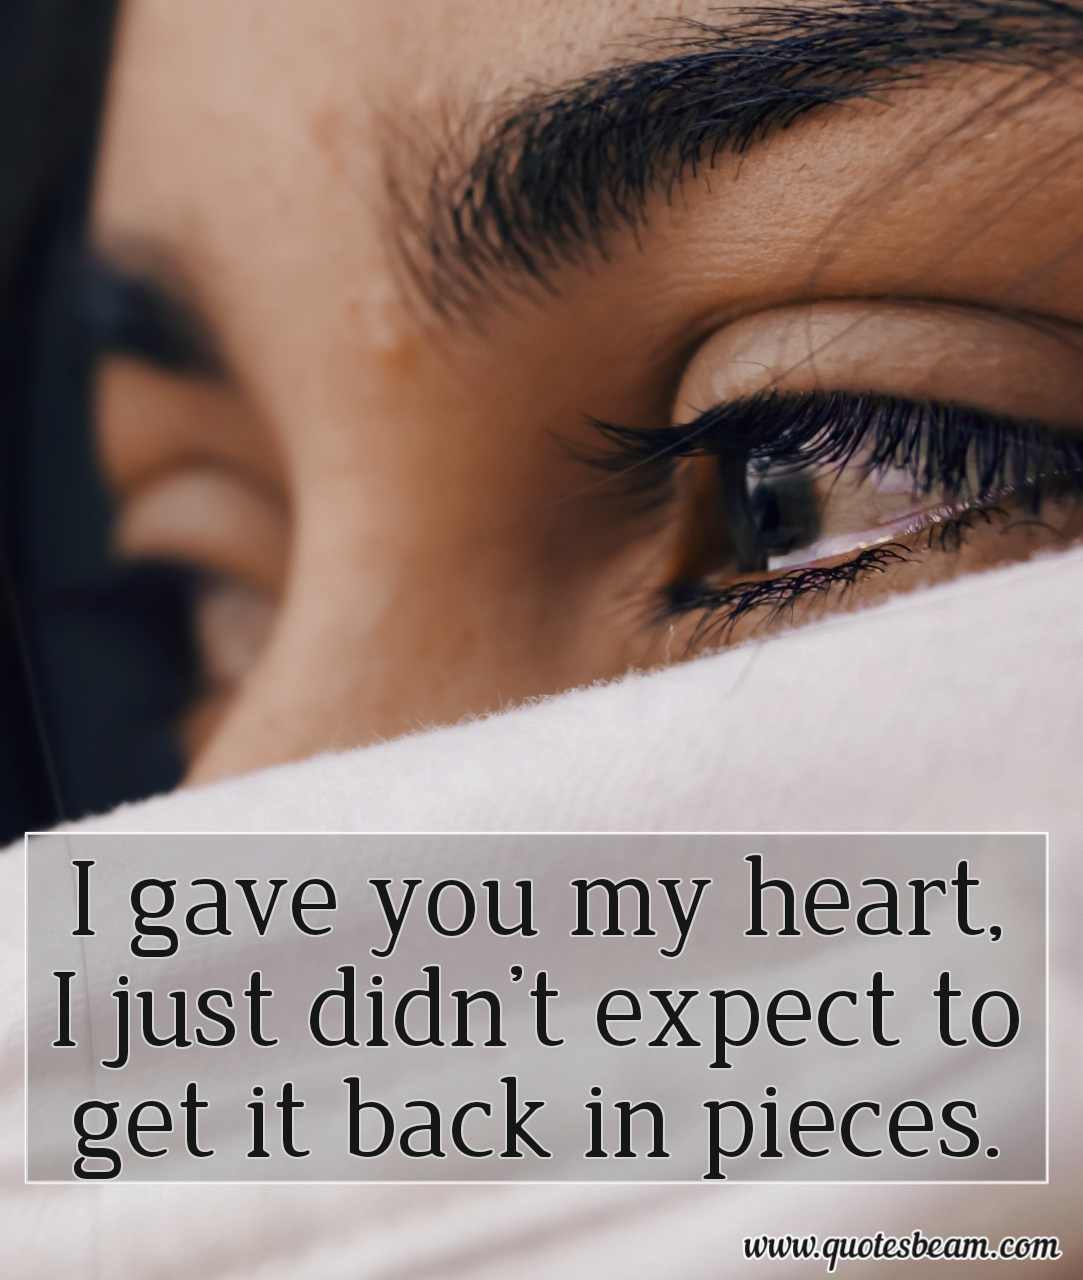 [SAD] Broken heart quotes Images | Pictures to heal your broken heart